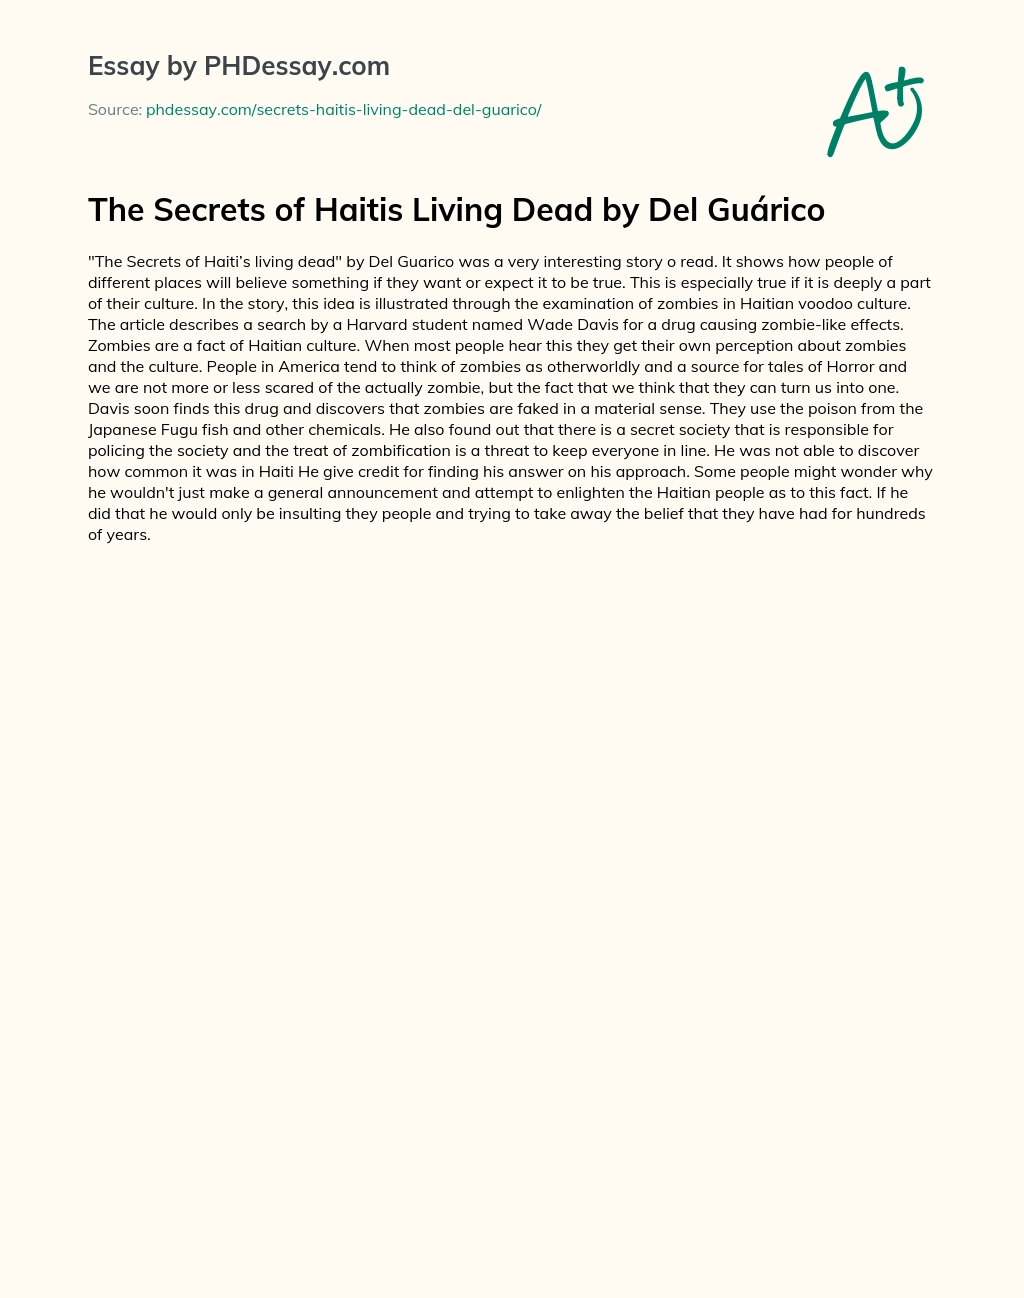 The Secrets of Haitis Living Dead by Del Guárico essay